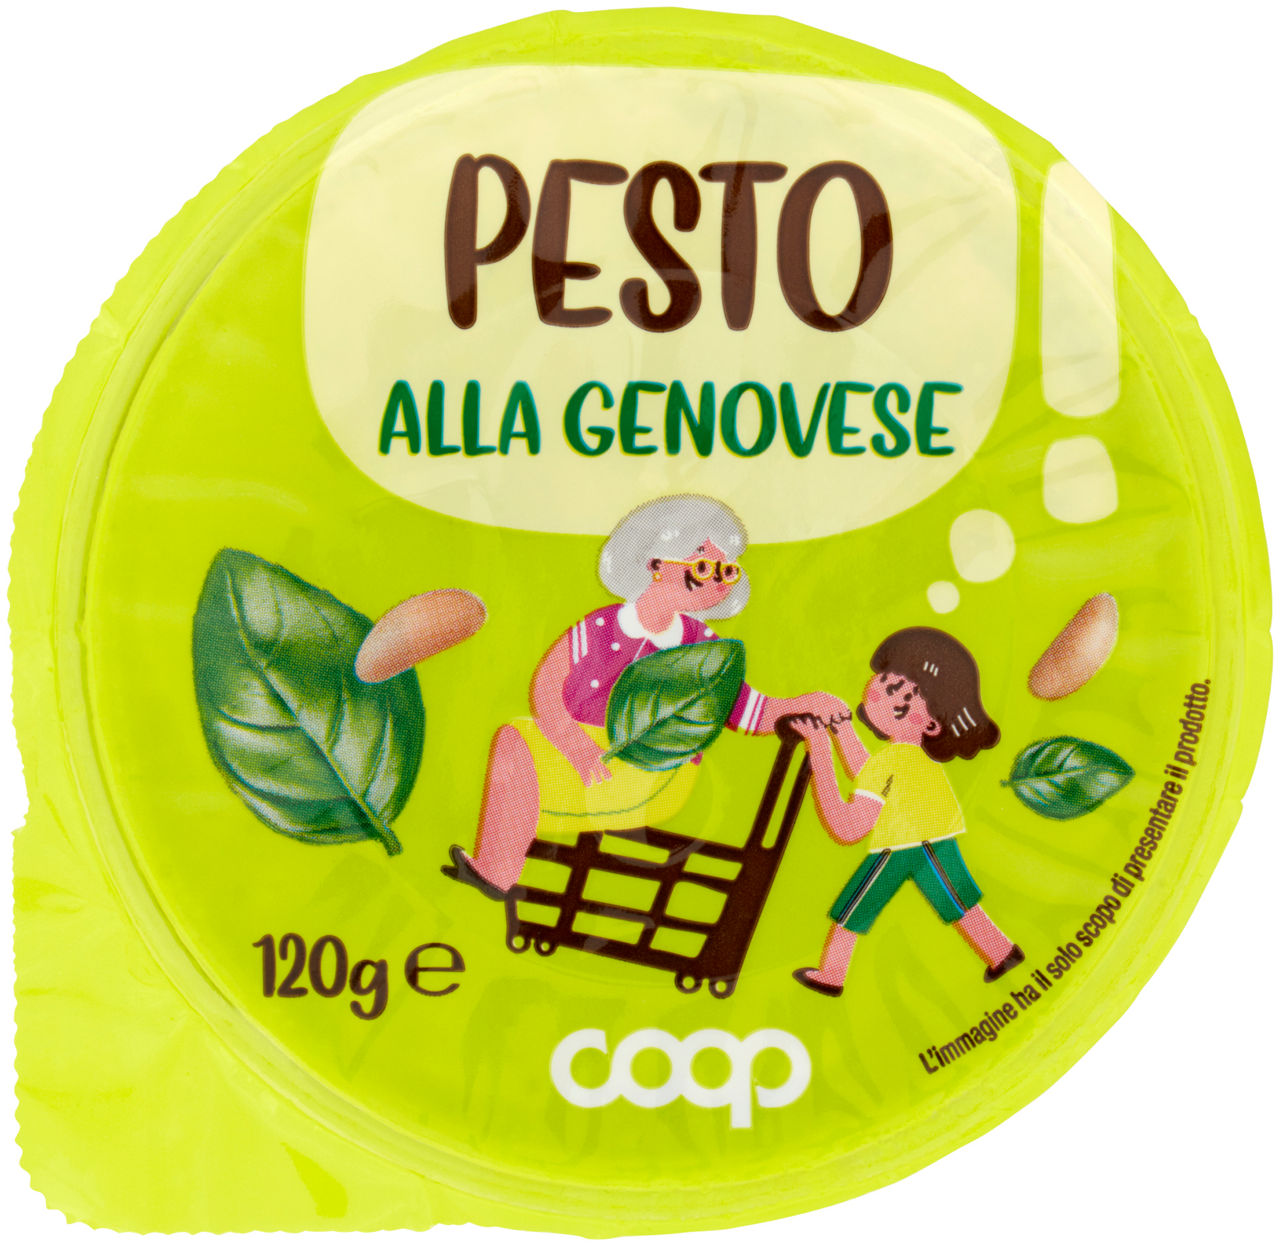 PESTO ALLA GENOVESE COOP G 120 - 0